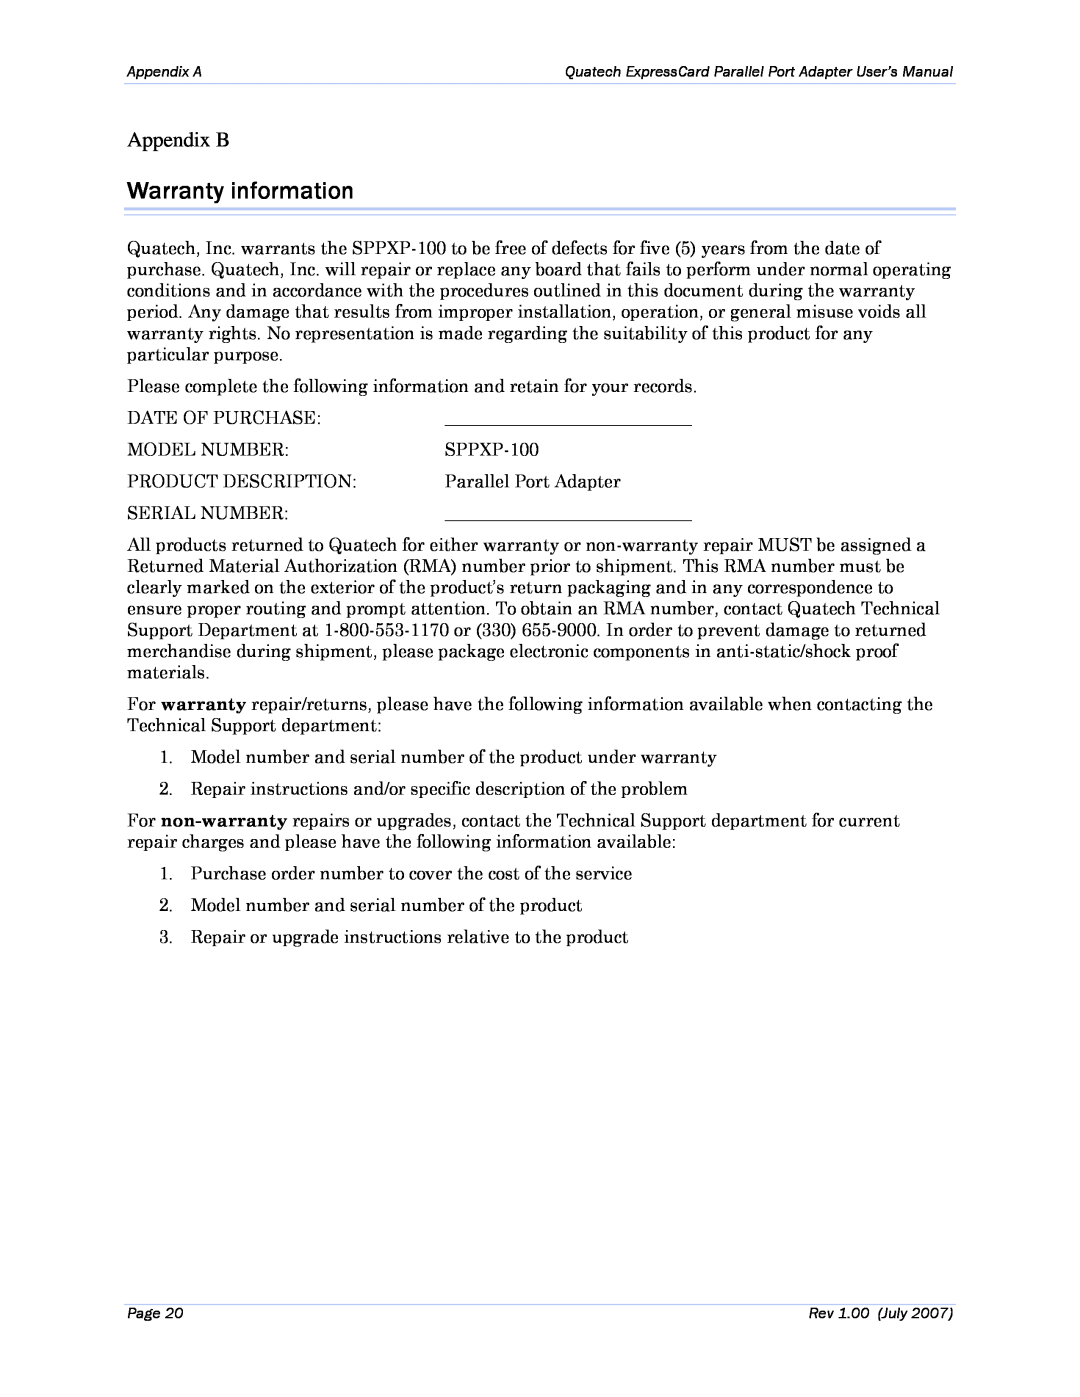 Quatech SPPXP-100 user manual Warranty information, Appendix B 